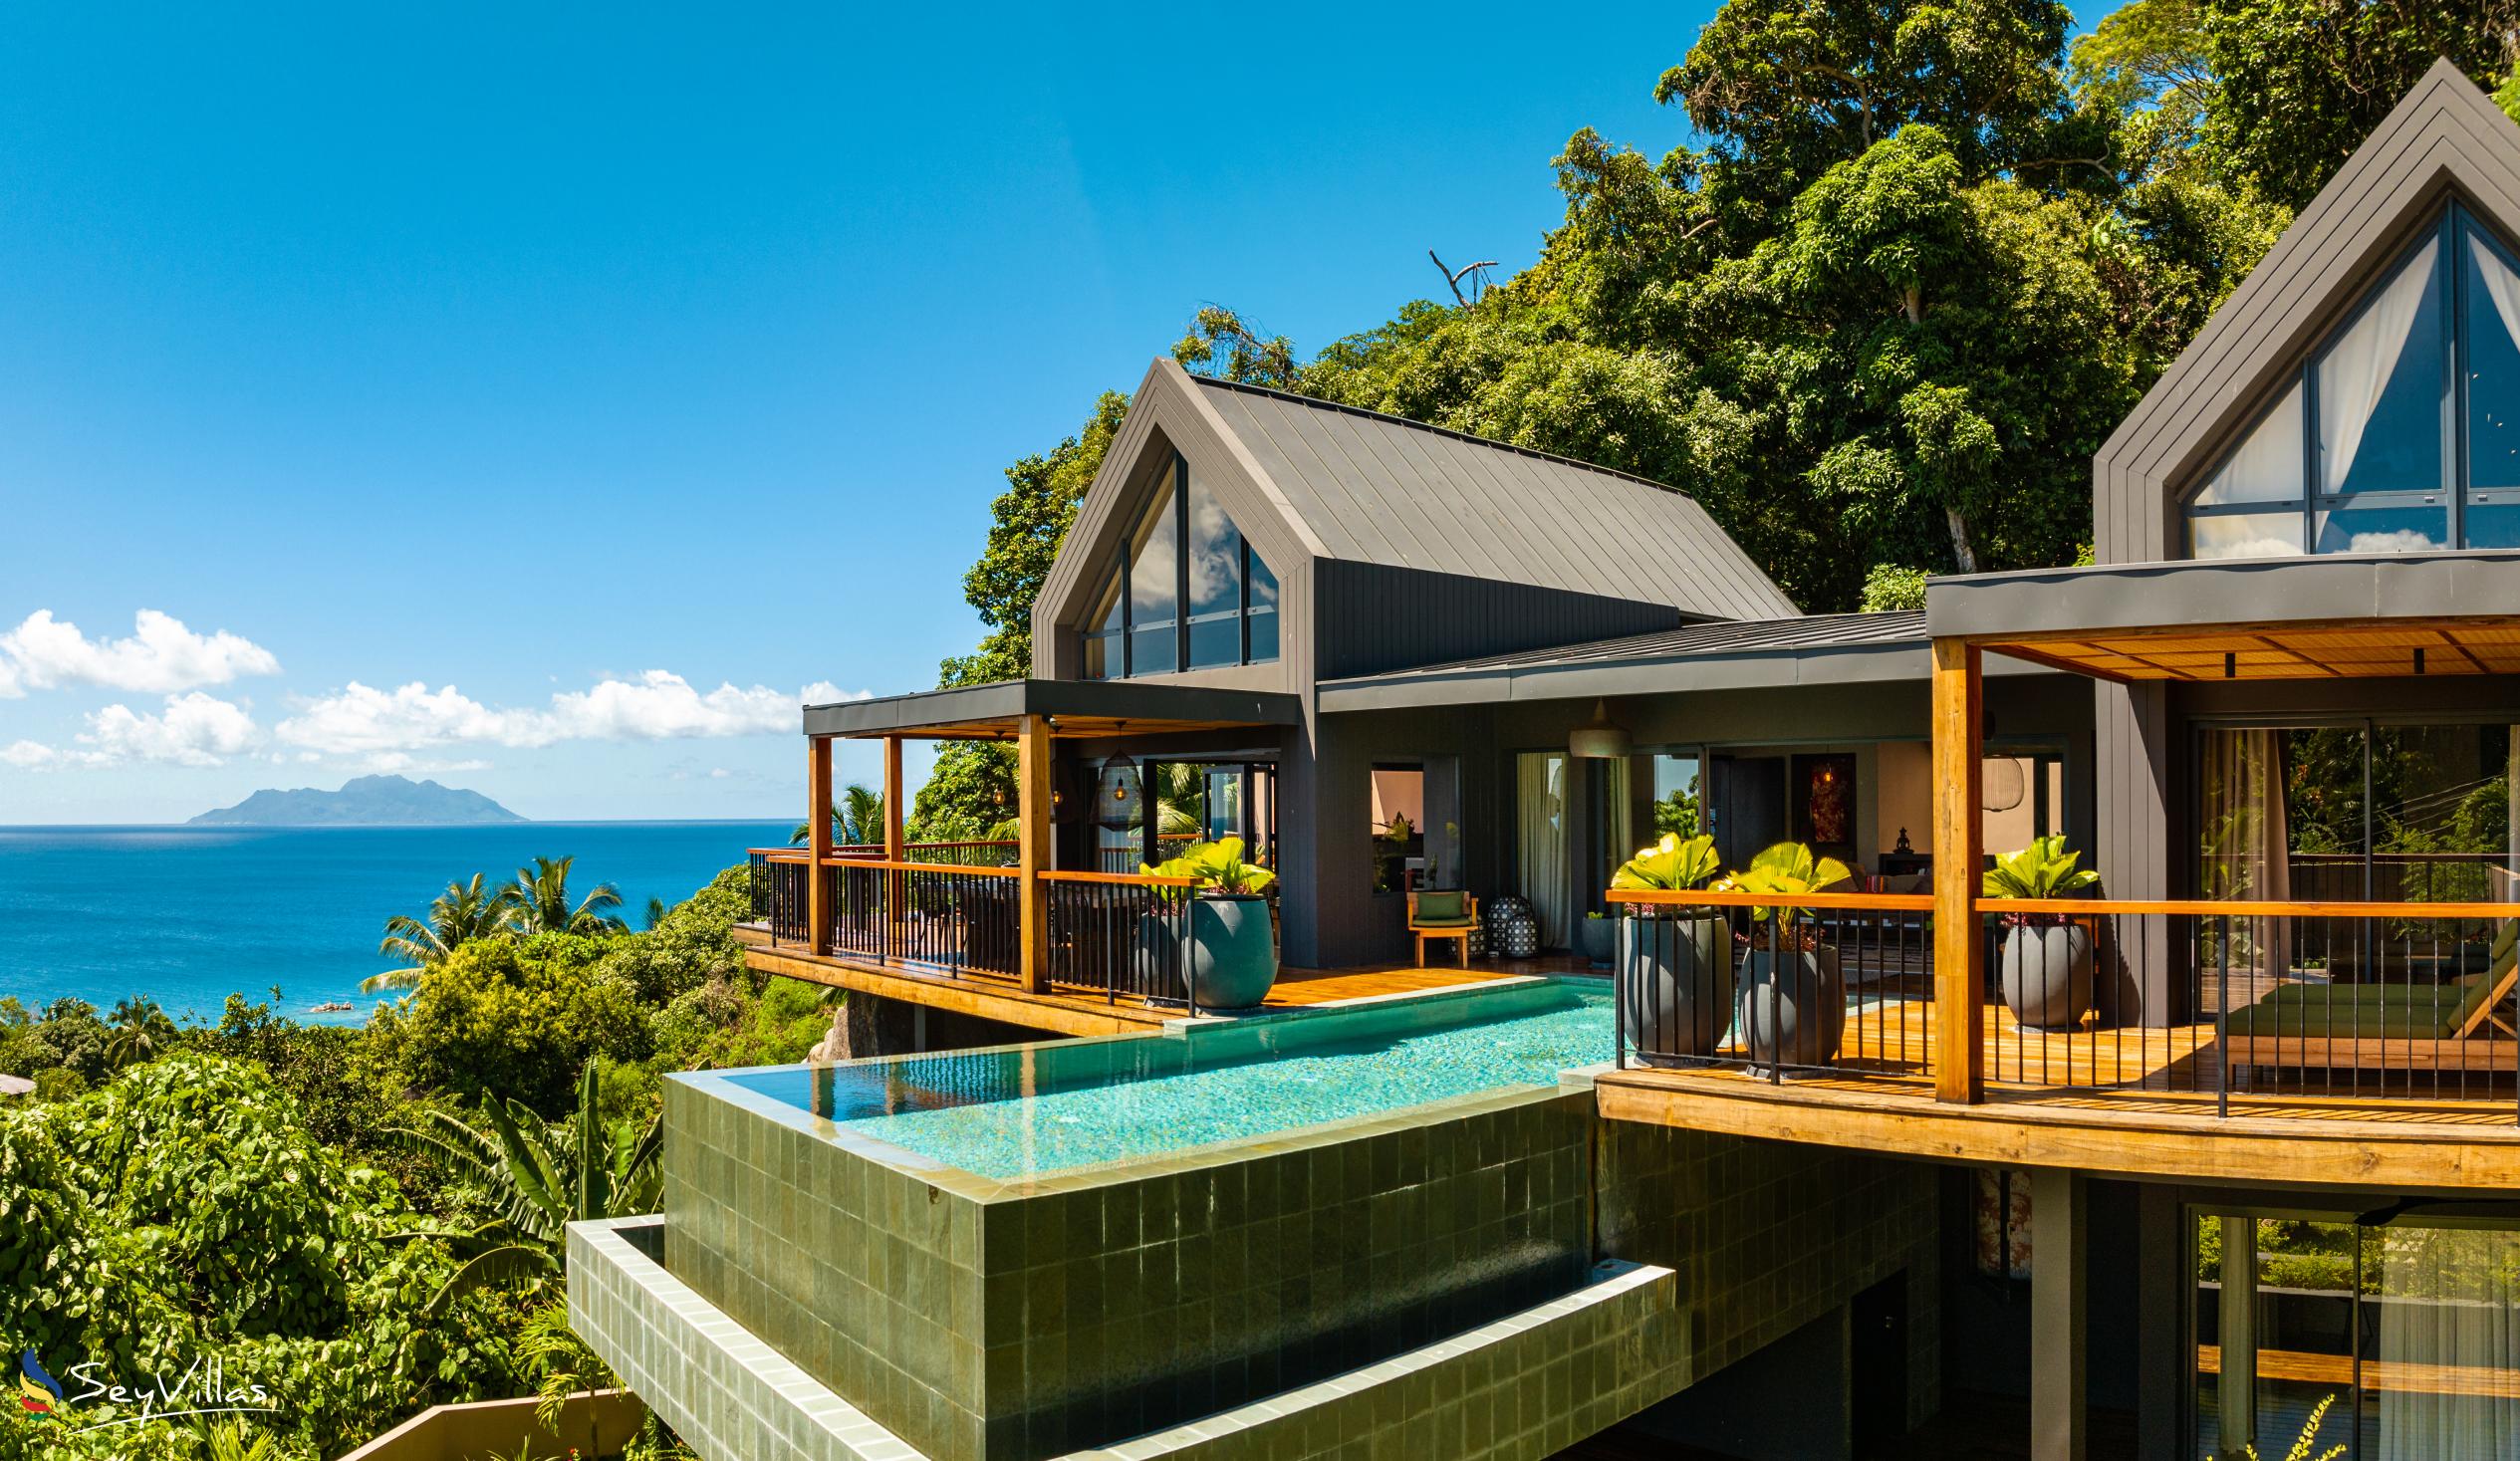 Photo 1: Maison Gaia - Outdoor area - Mahé (Seychelles)